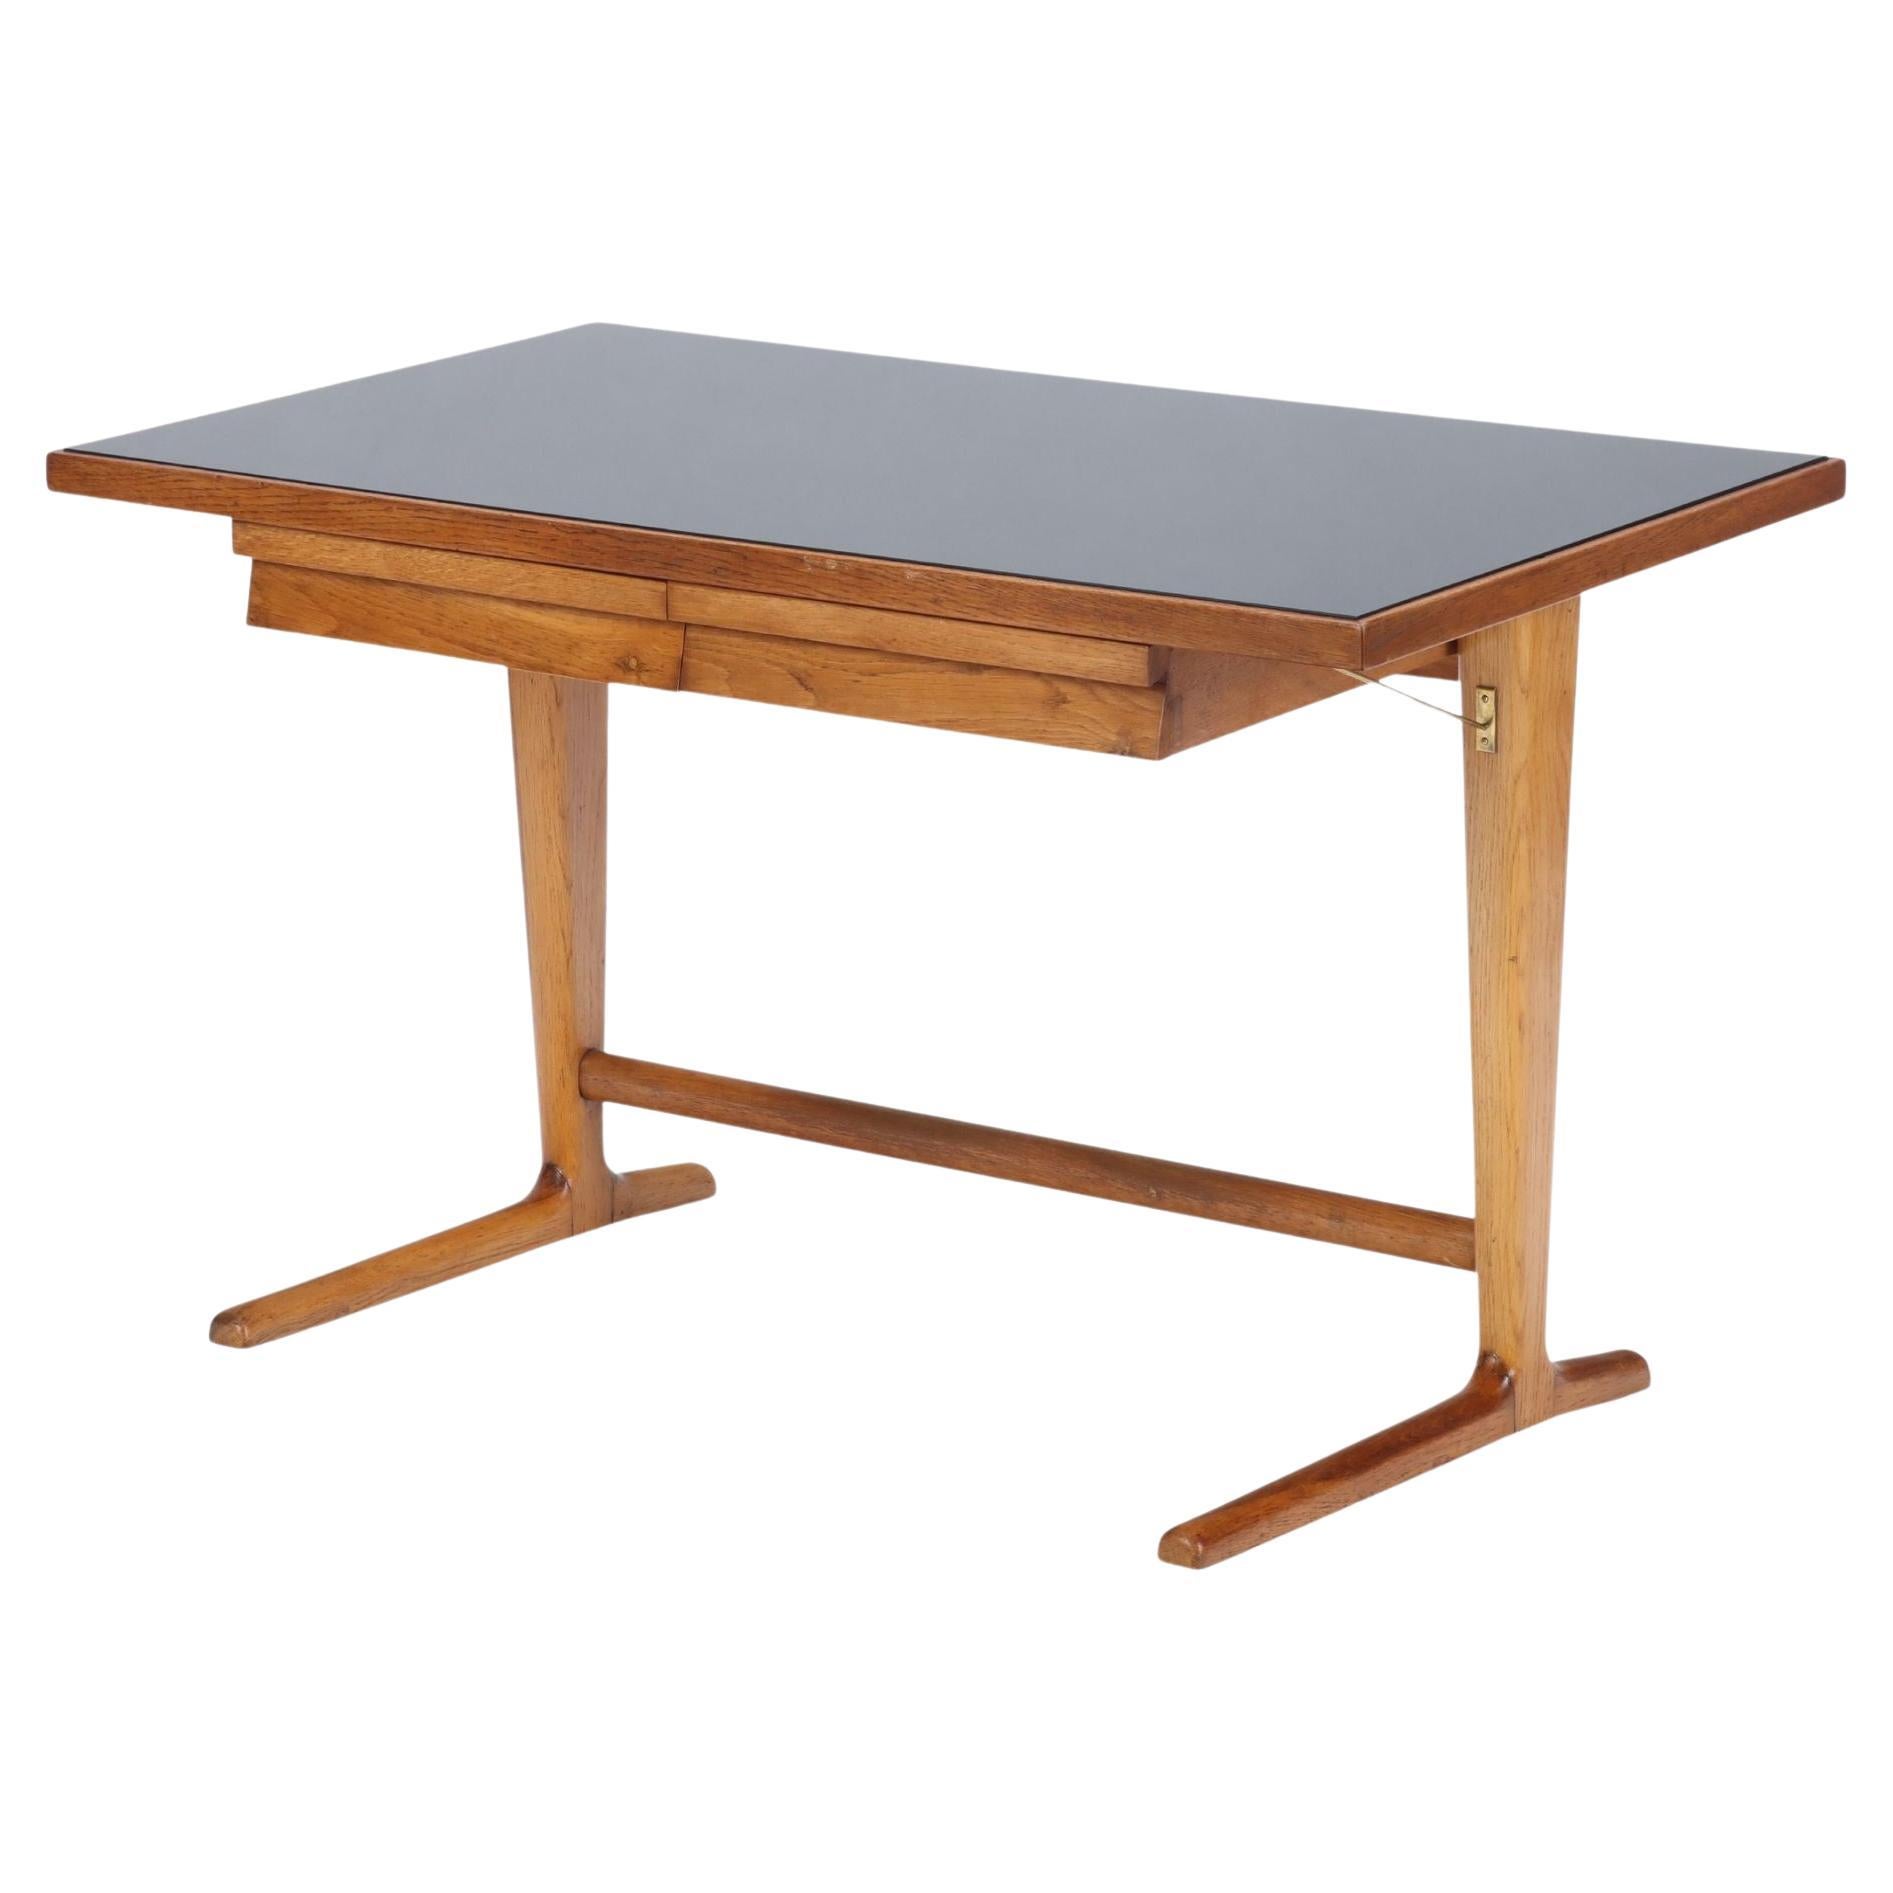 Italian Architect's Oak Table / Desk Made with a Slant, circa 1960 For Sale